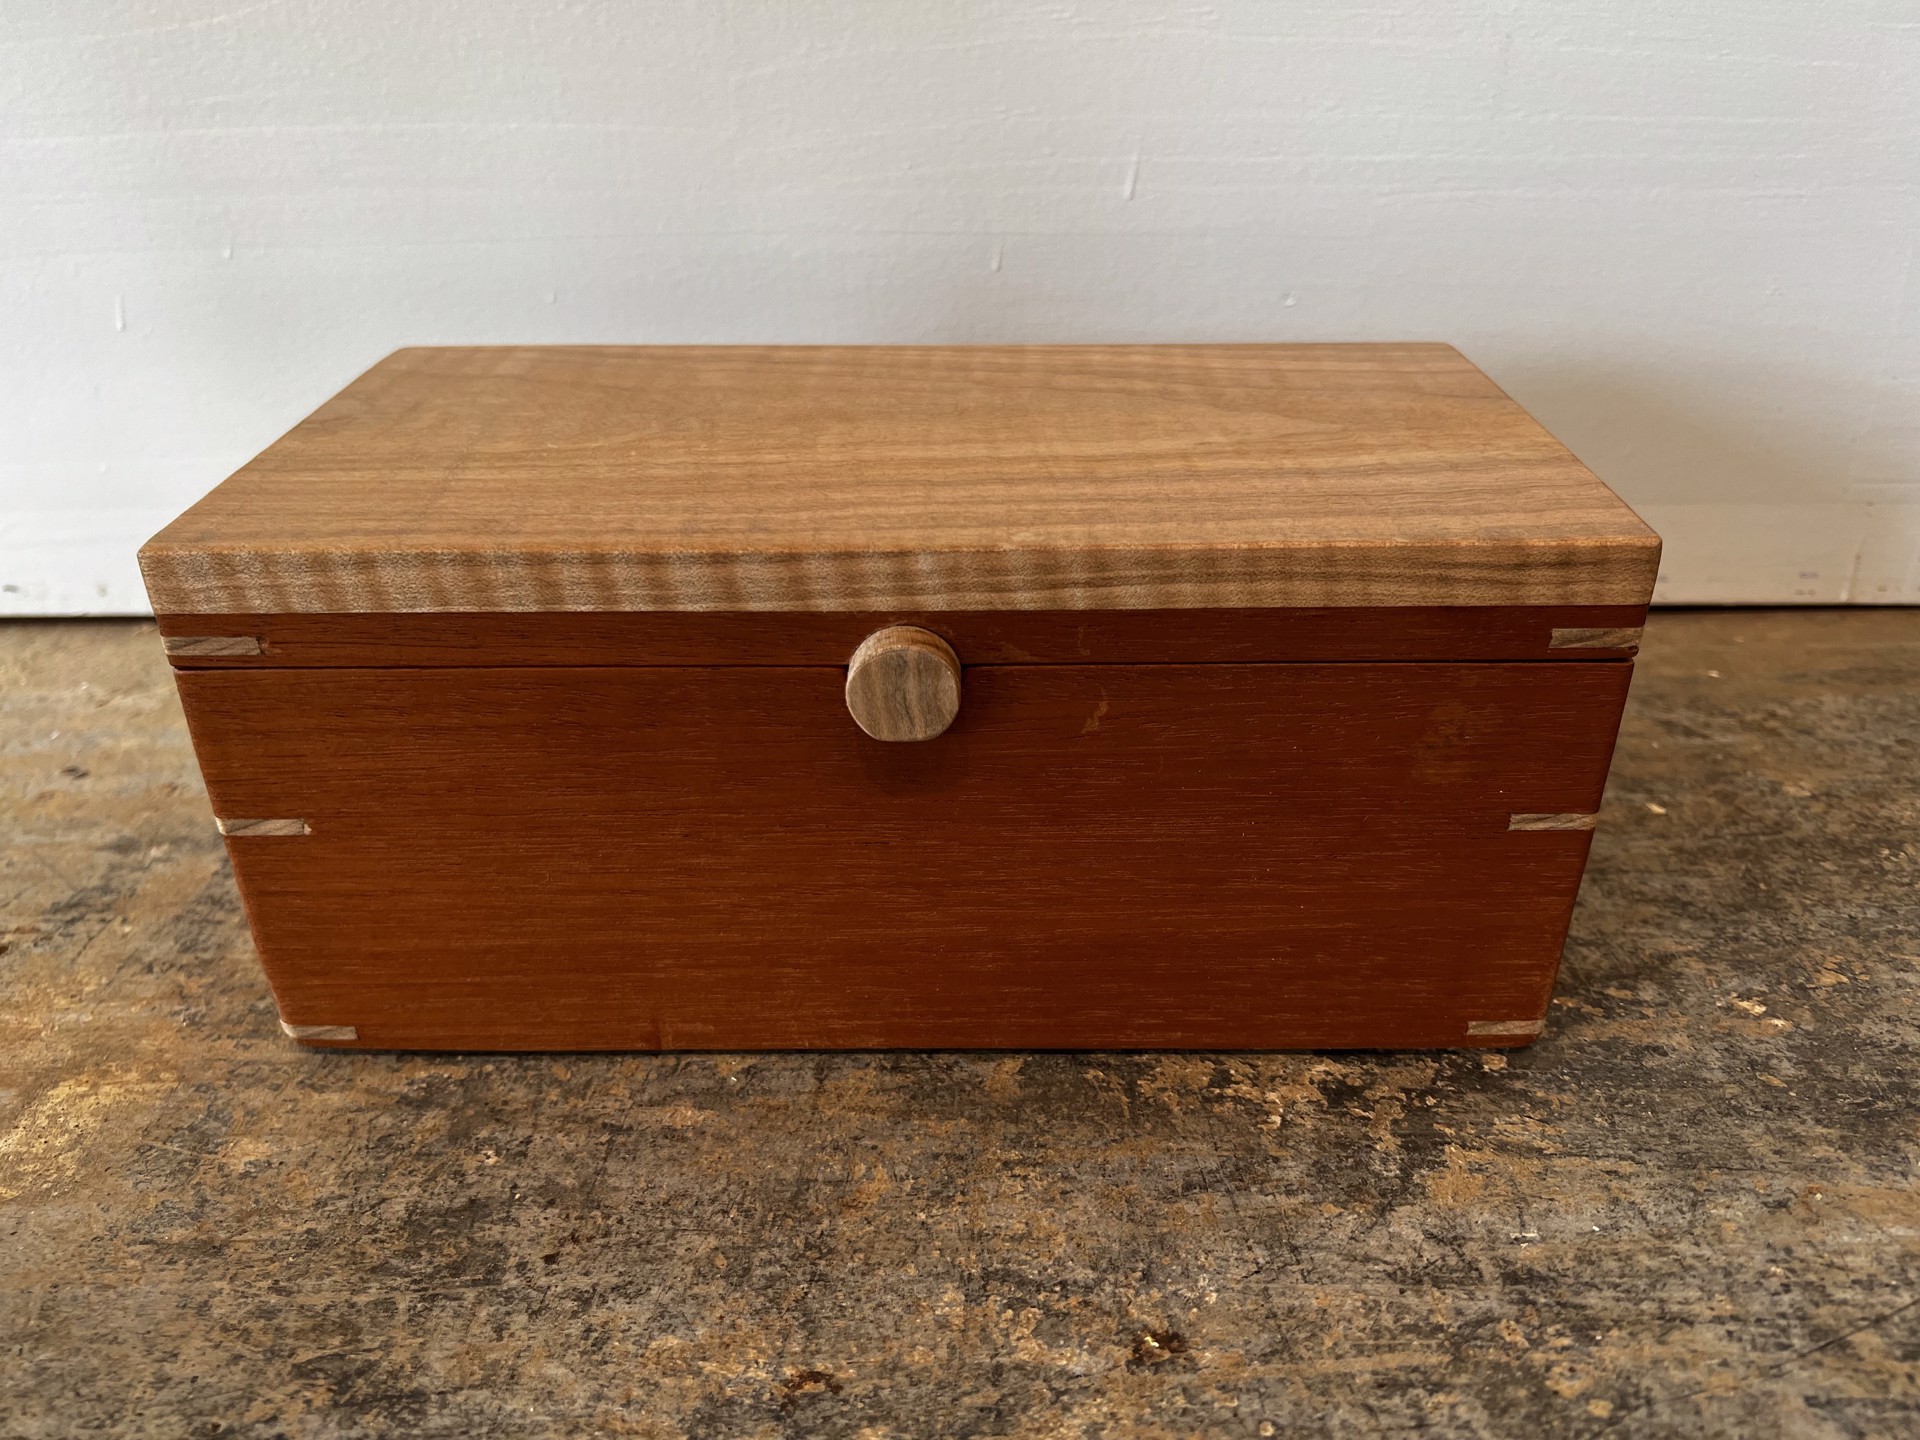 Handmade Wooden Box 2 by William Dunaway